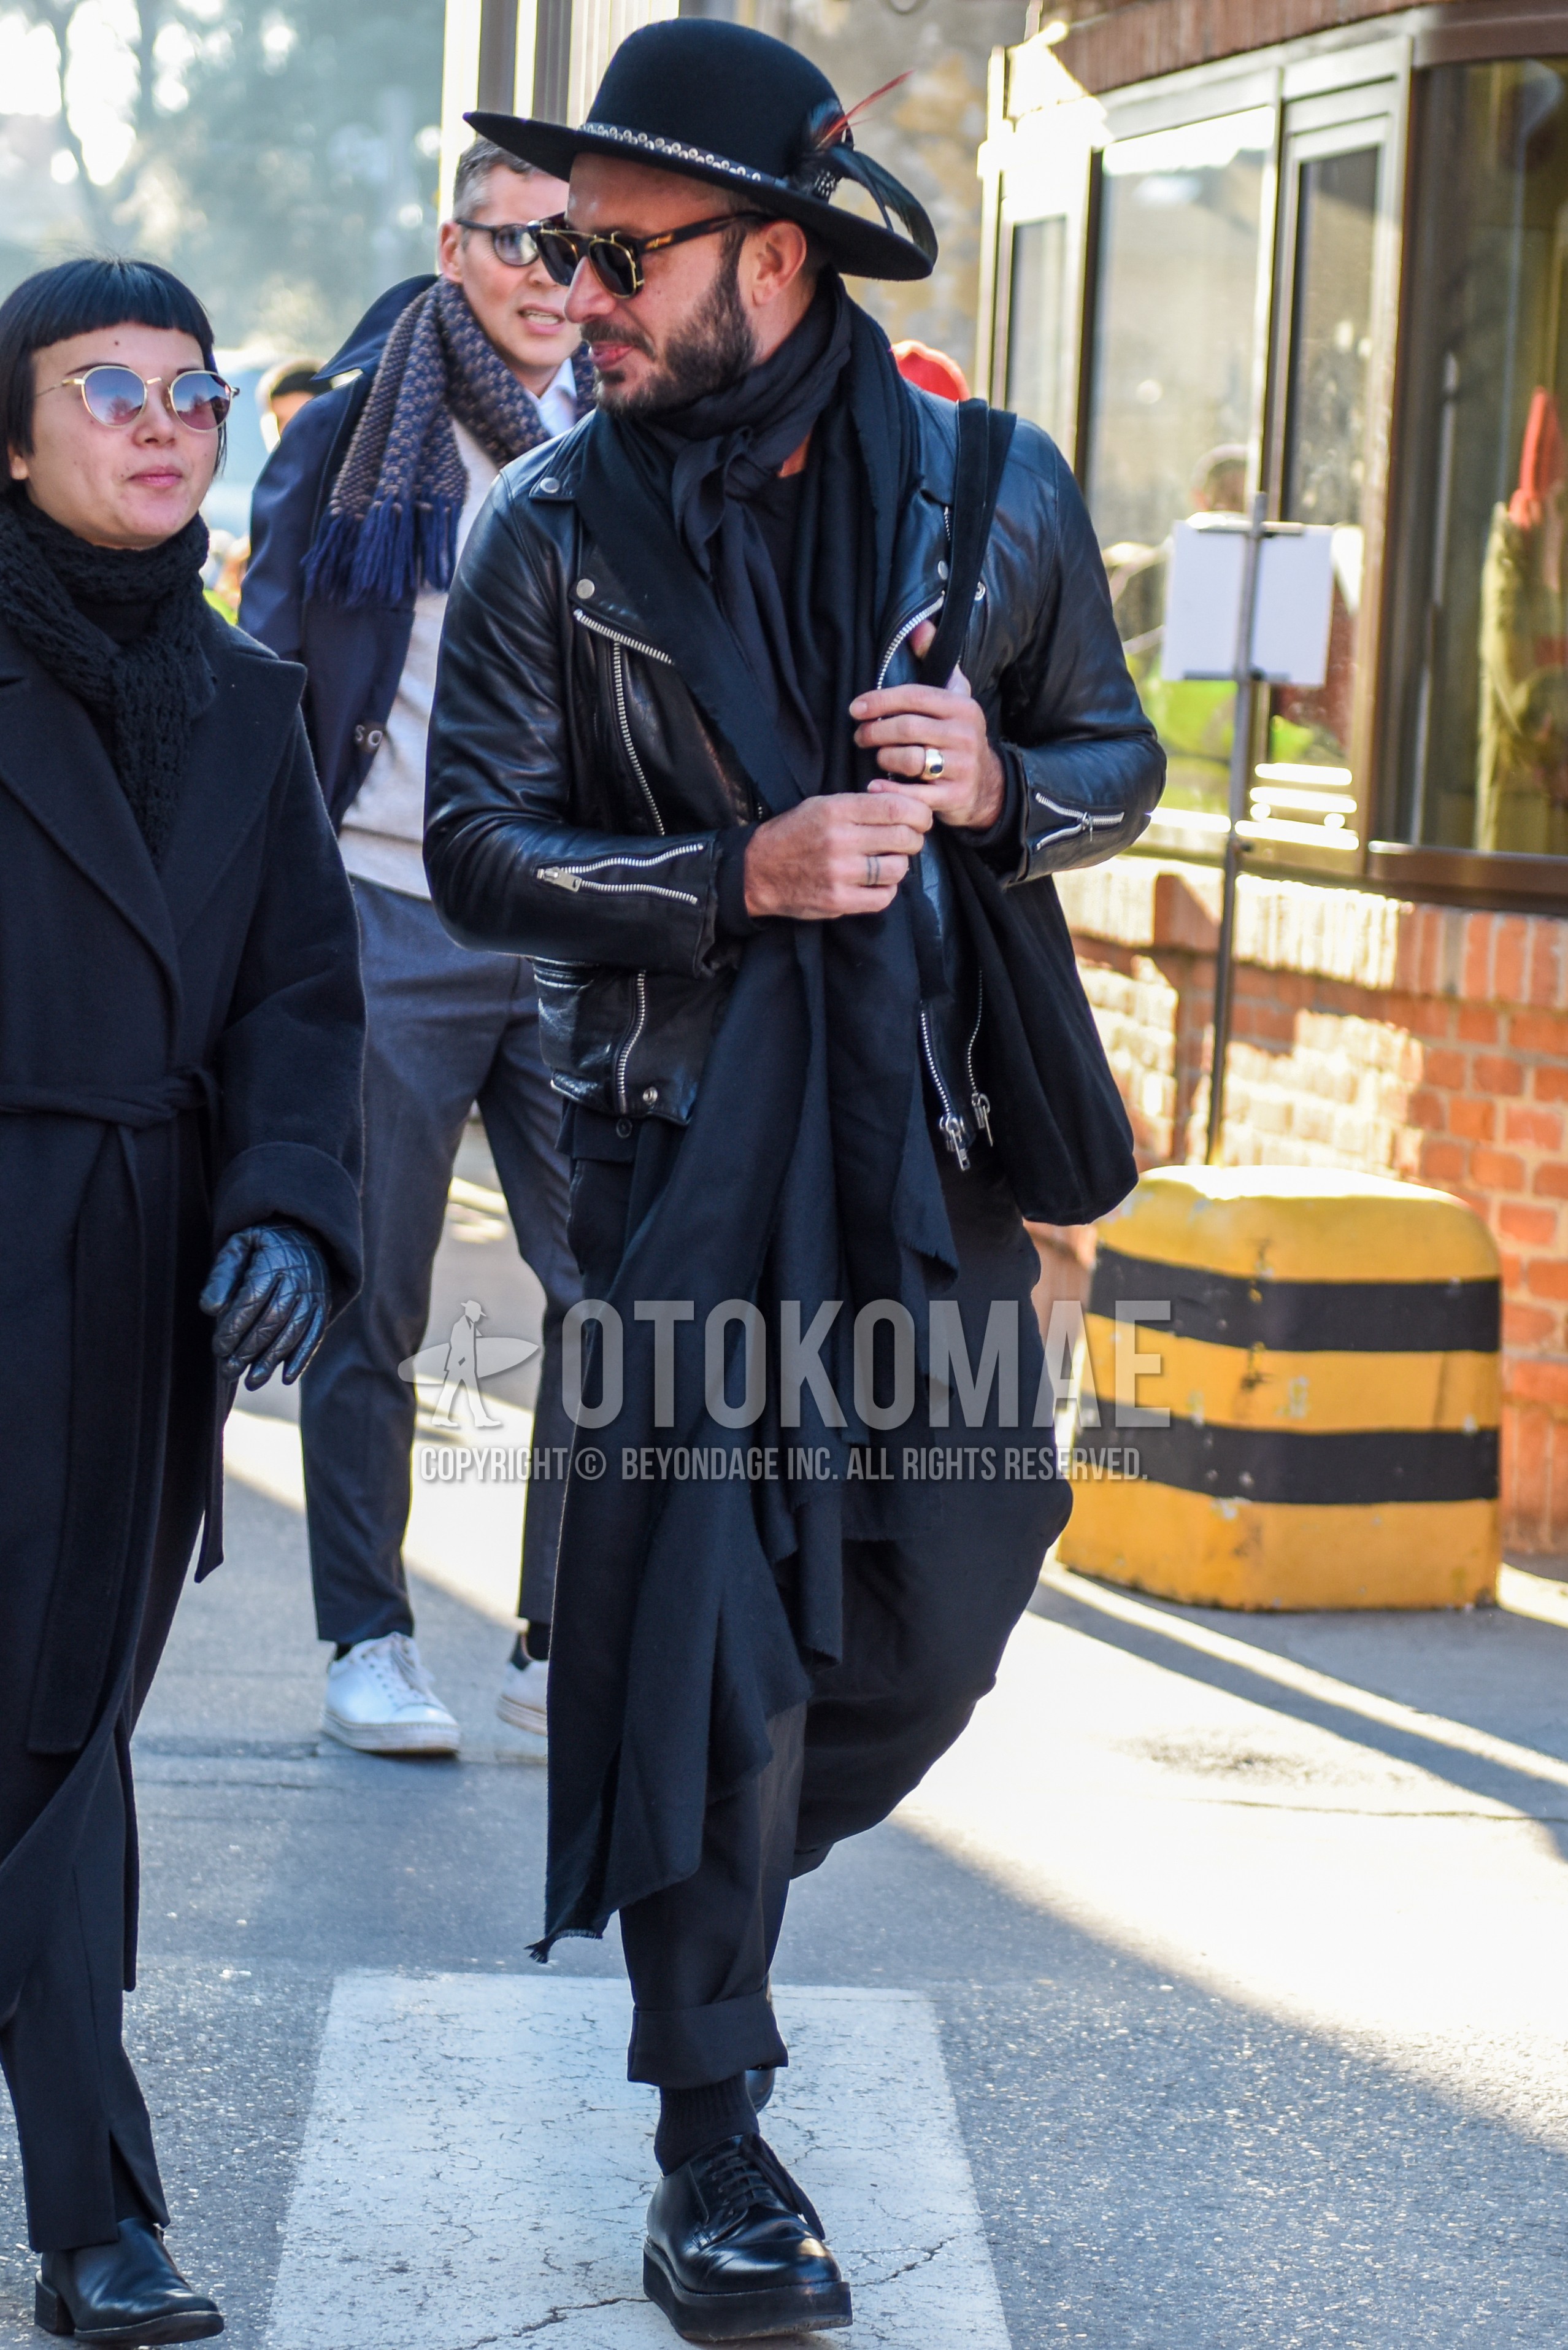 Men's autumn winter outfit with navy plain hat, black plain sunglasses, gray plain scarf, black plain riders jacket, gray plain slacks, dark gray plain socks, black straight-tip shoes leather shoes.